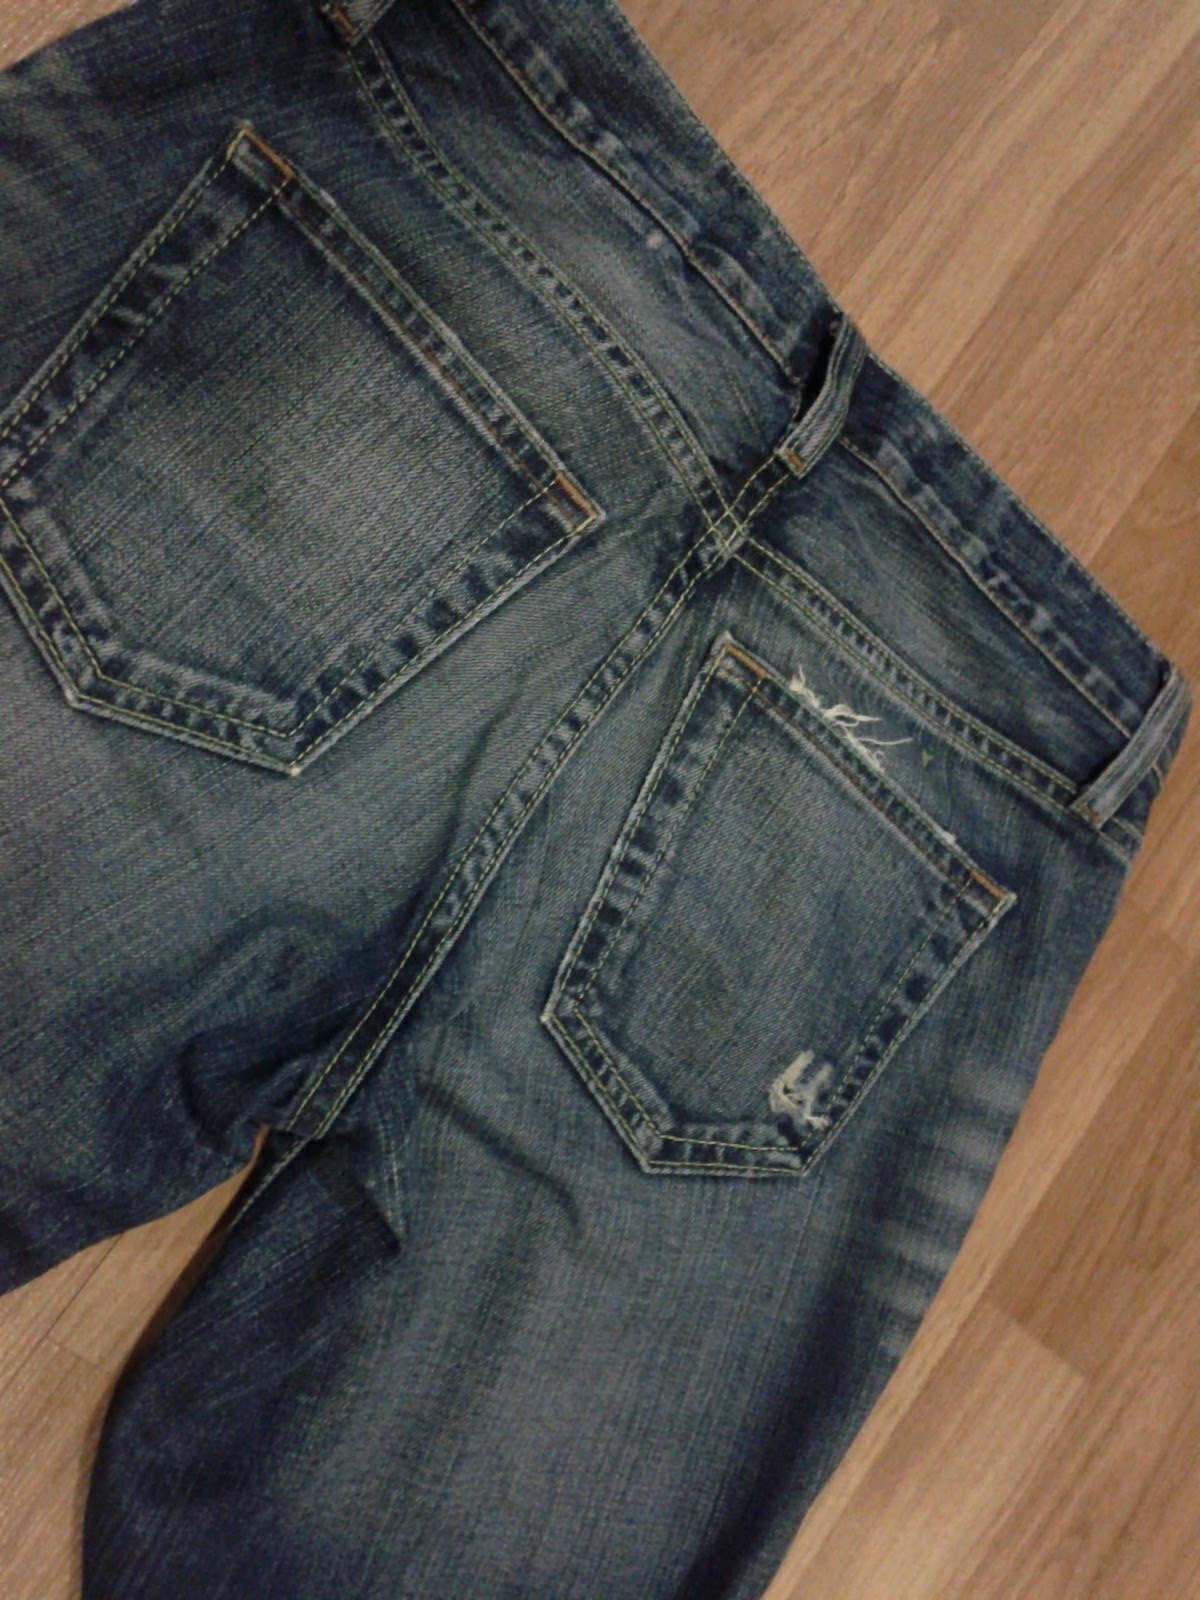 The Good Samaritan Shop.: Gap Long and Lean jeans - SOLD!